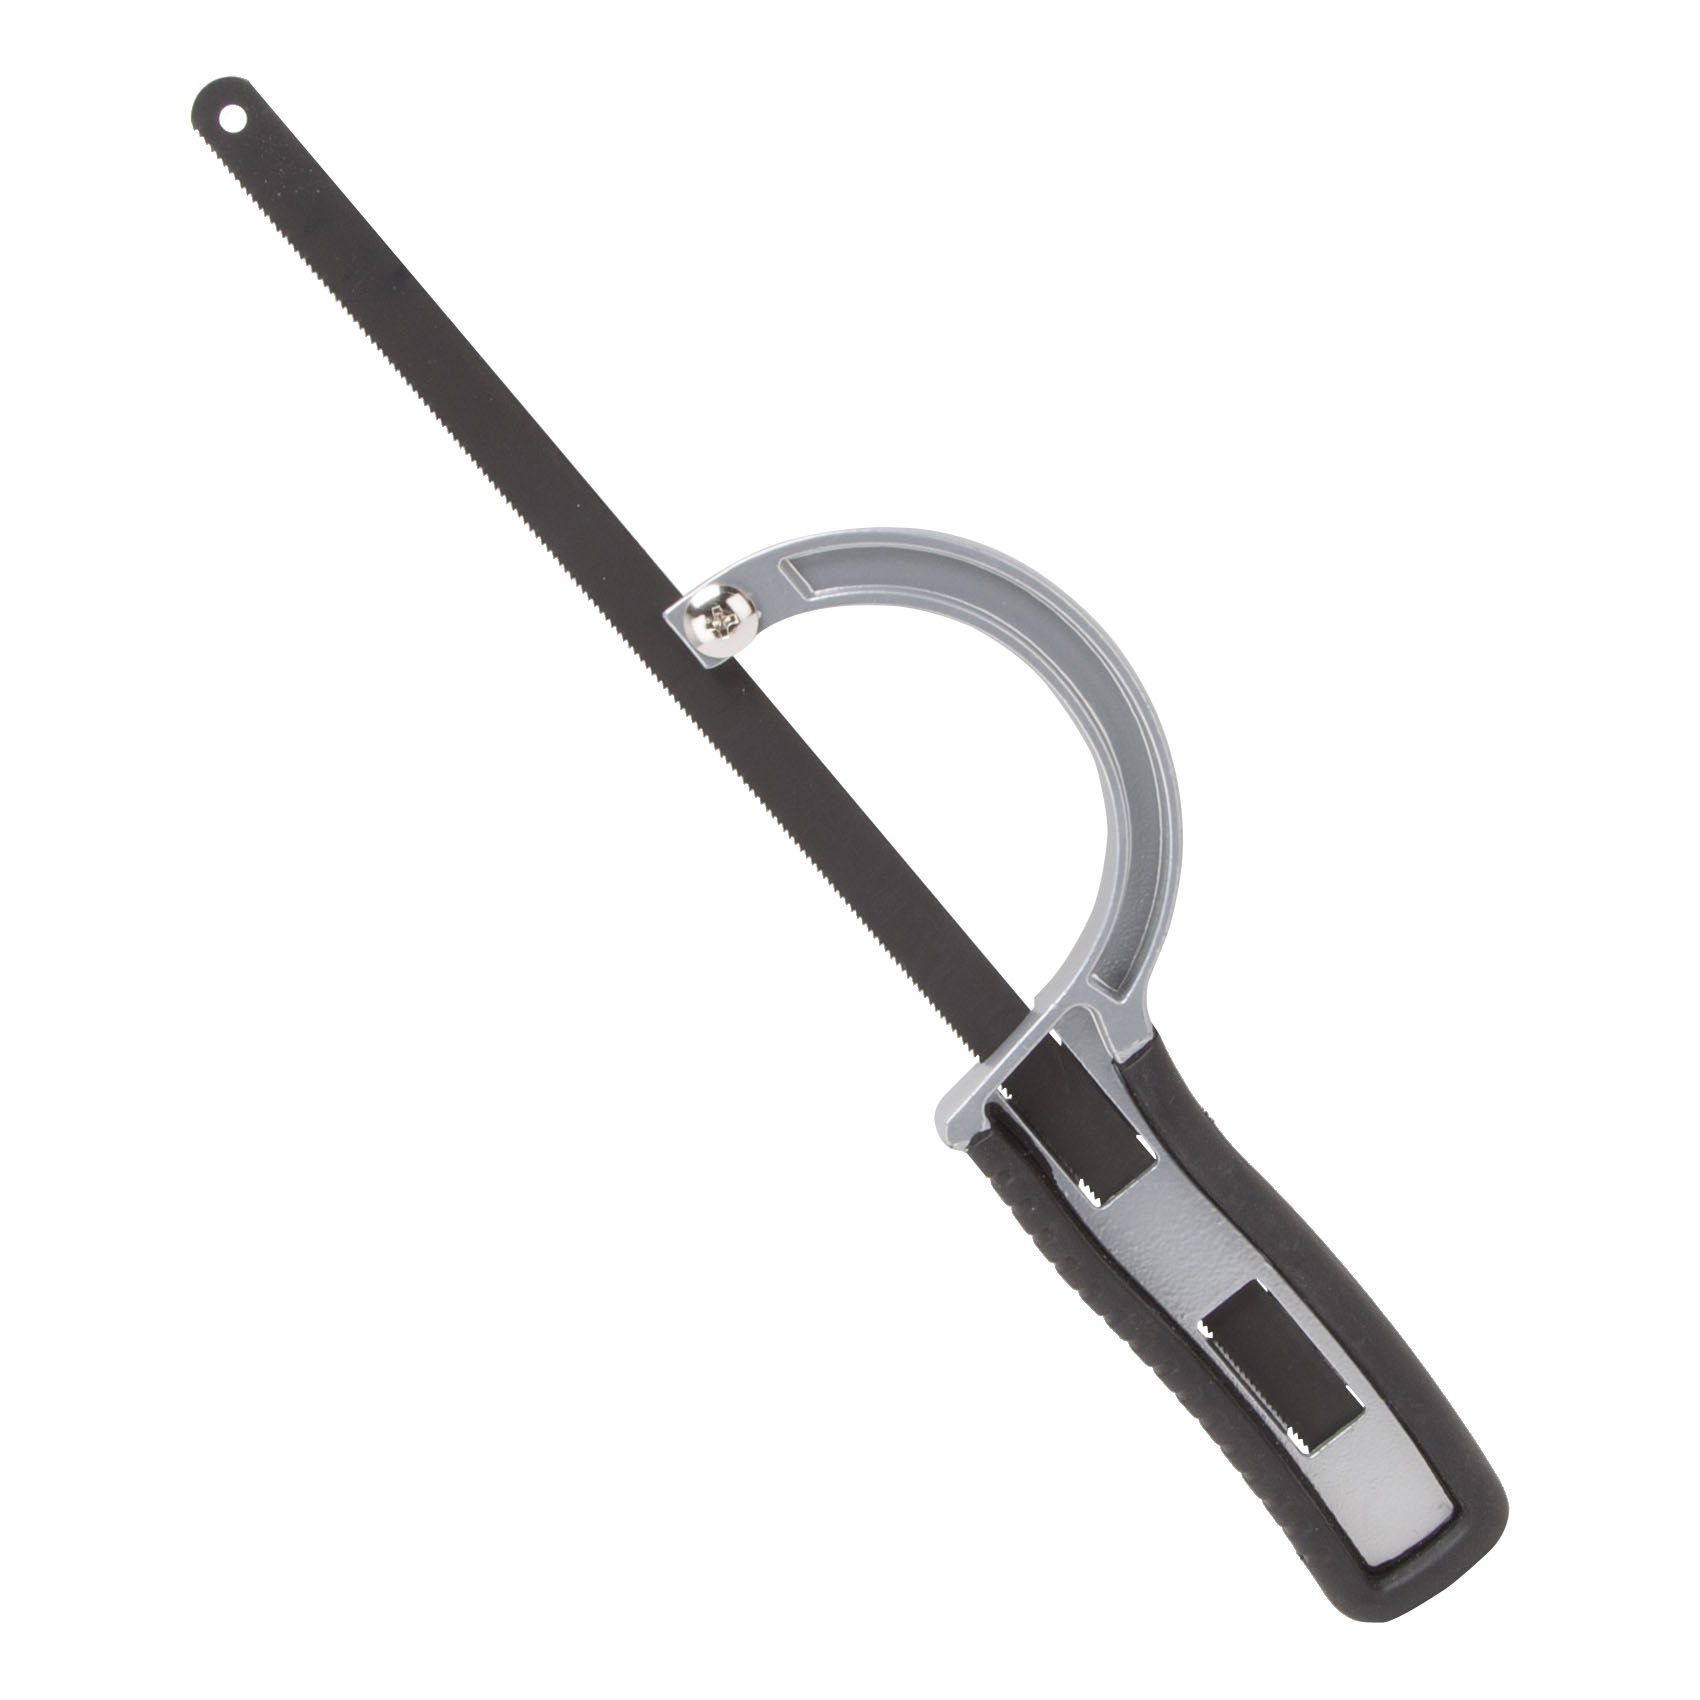 H-2113 Mini Hacksaw, 12 in L Blade, 18 TPI, Steel Blade, 1-1/4 in D Throat, Aluminum Frame